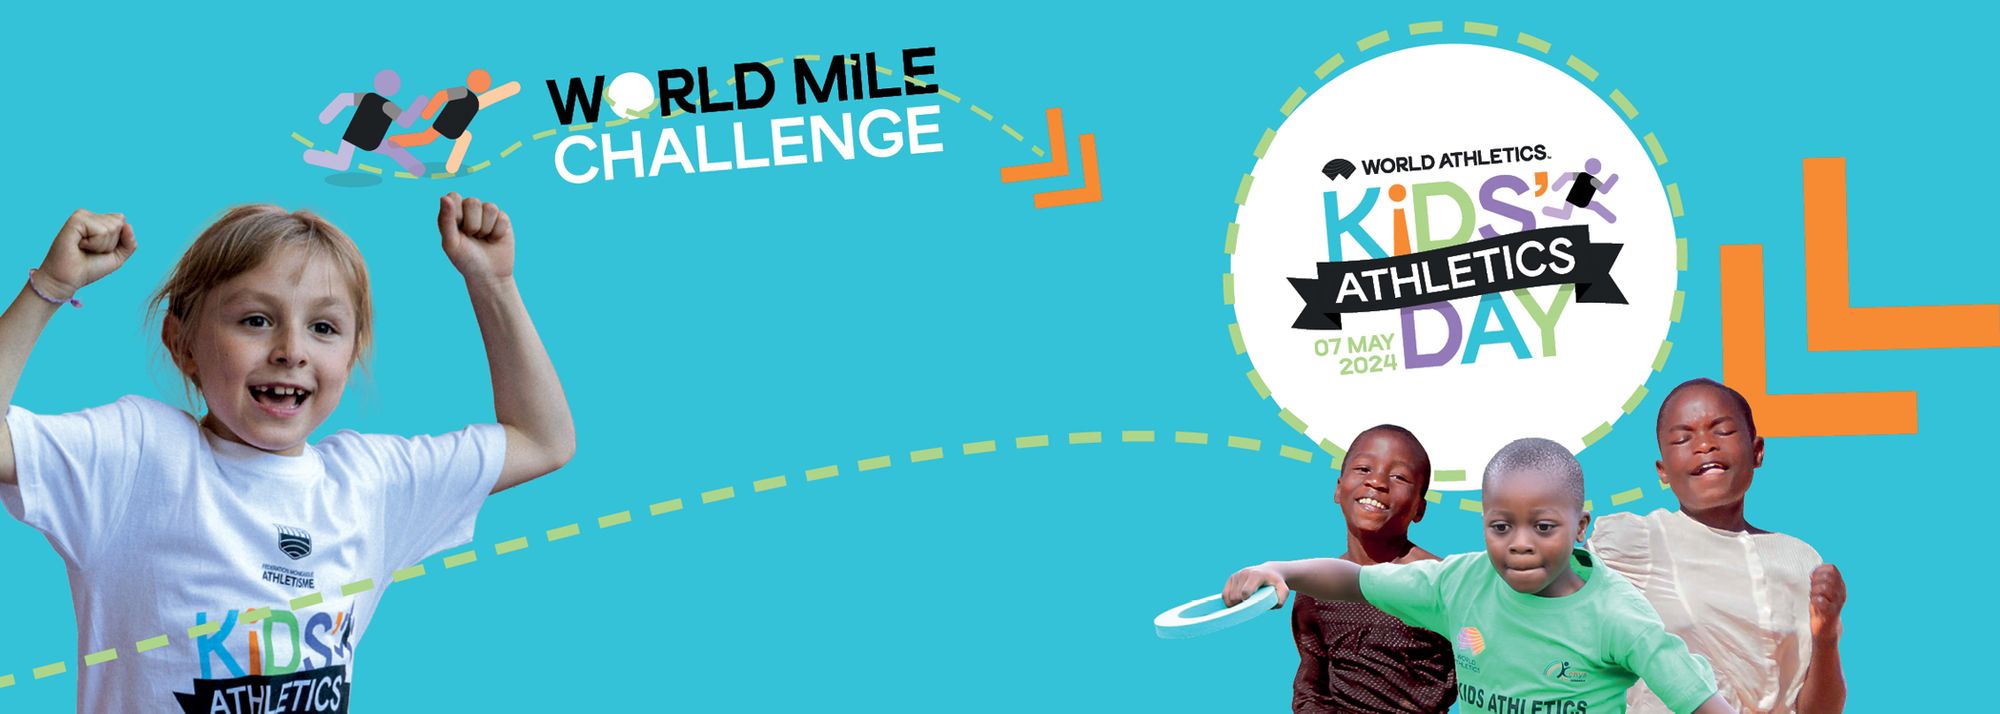 World Mile Challenge web app to keep track of miles run across the globe